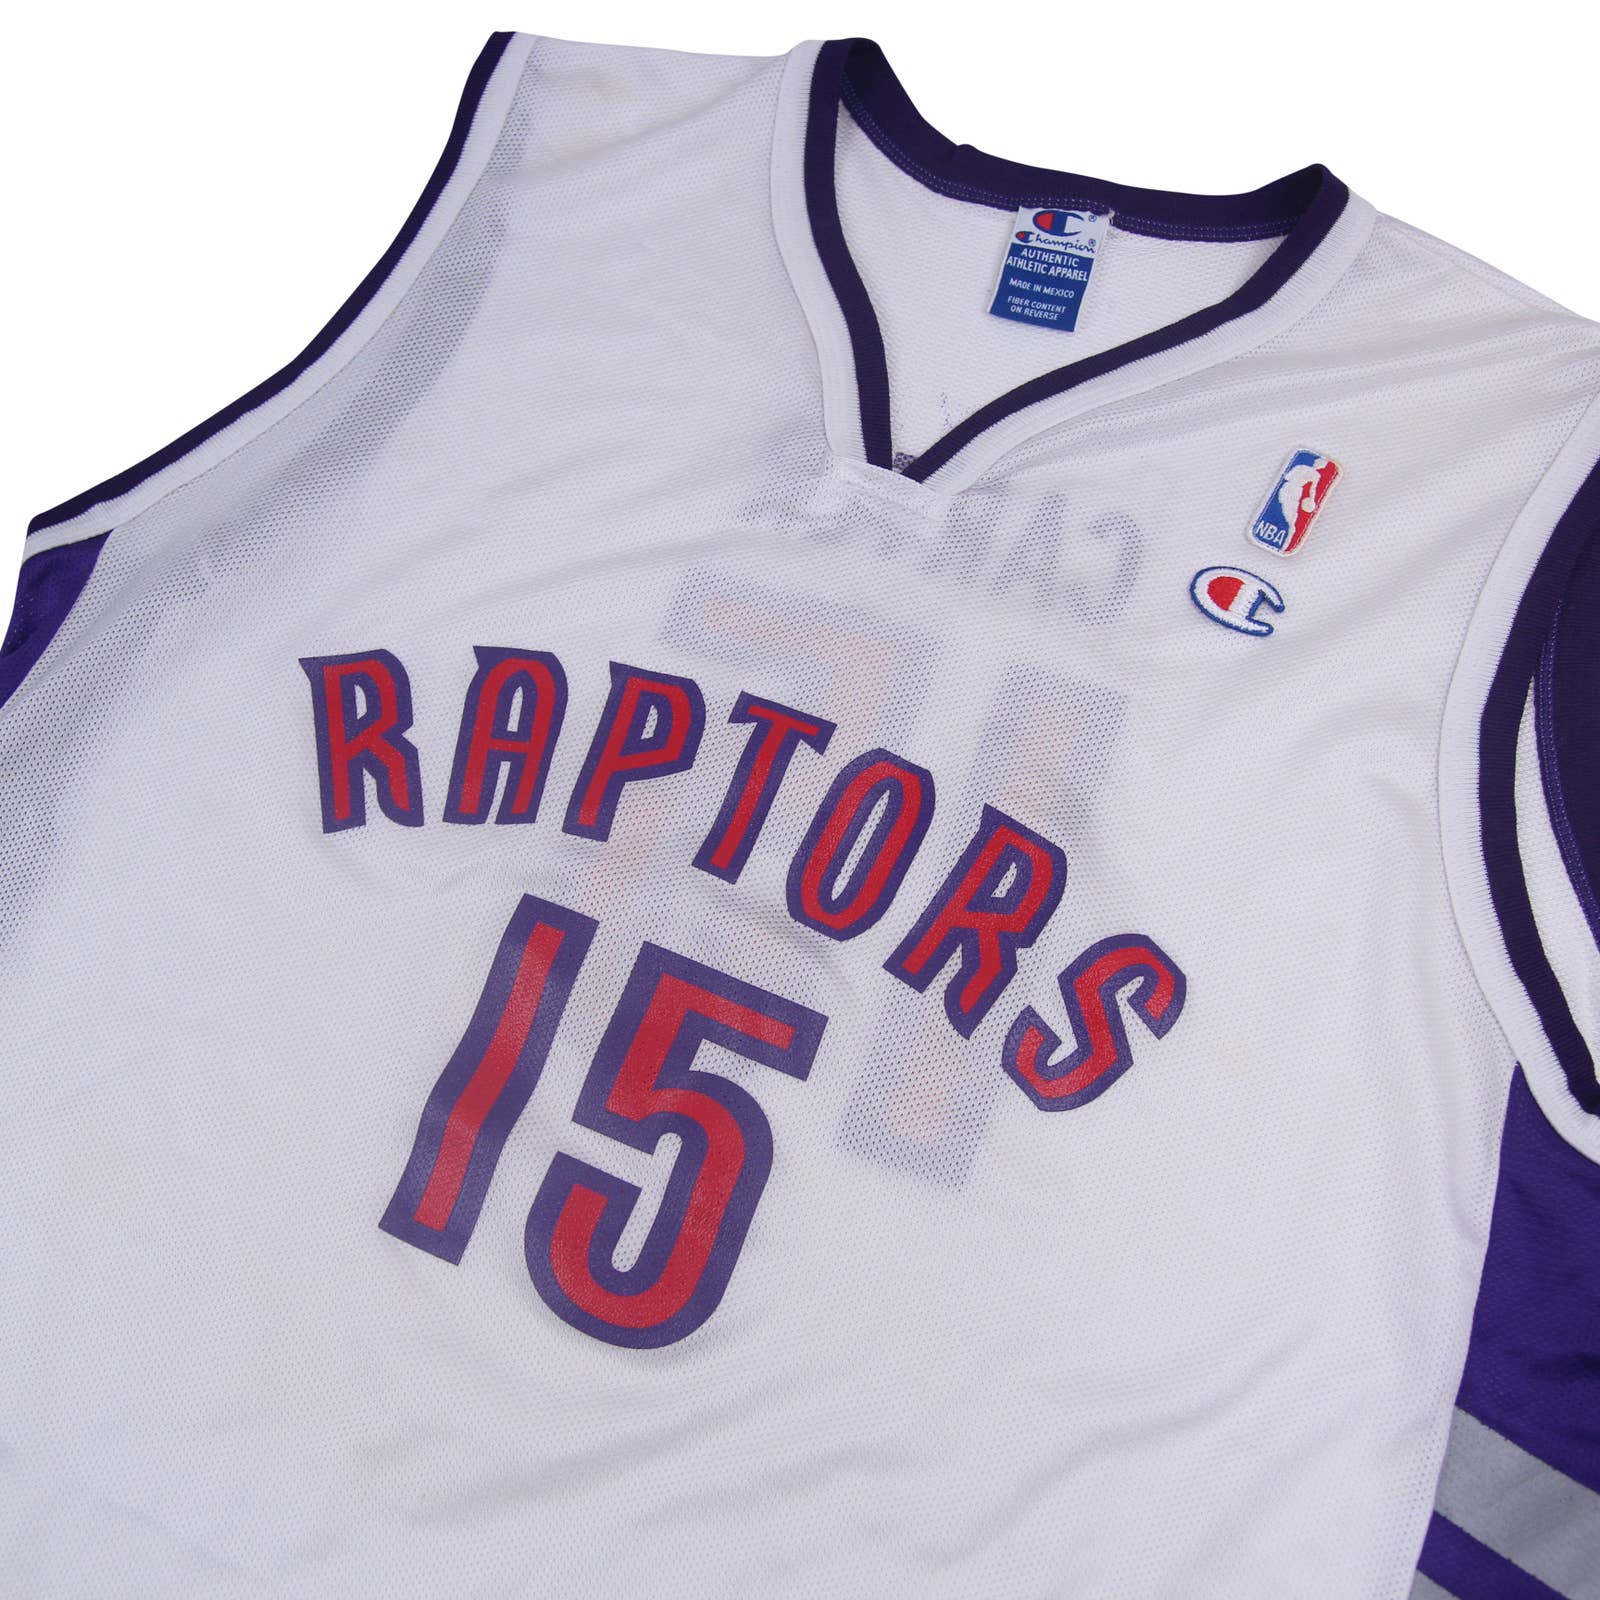 Vince Carter Toronto Raptors Jersey – Classic Authentics